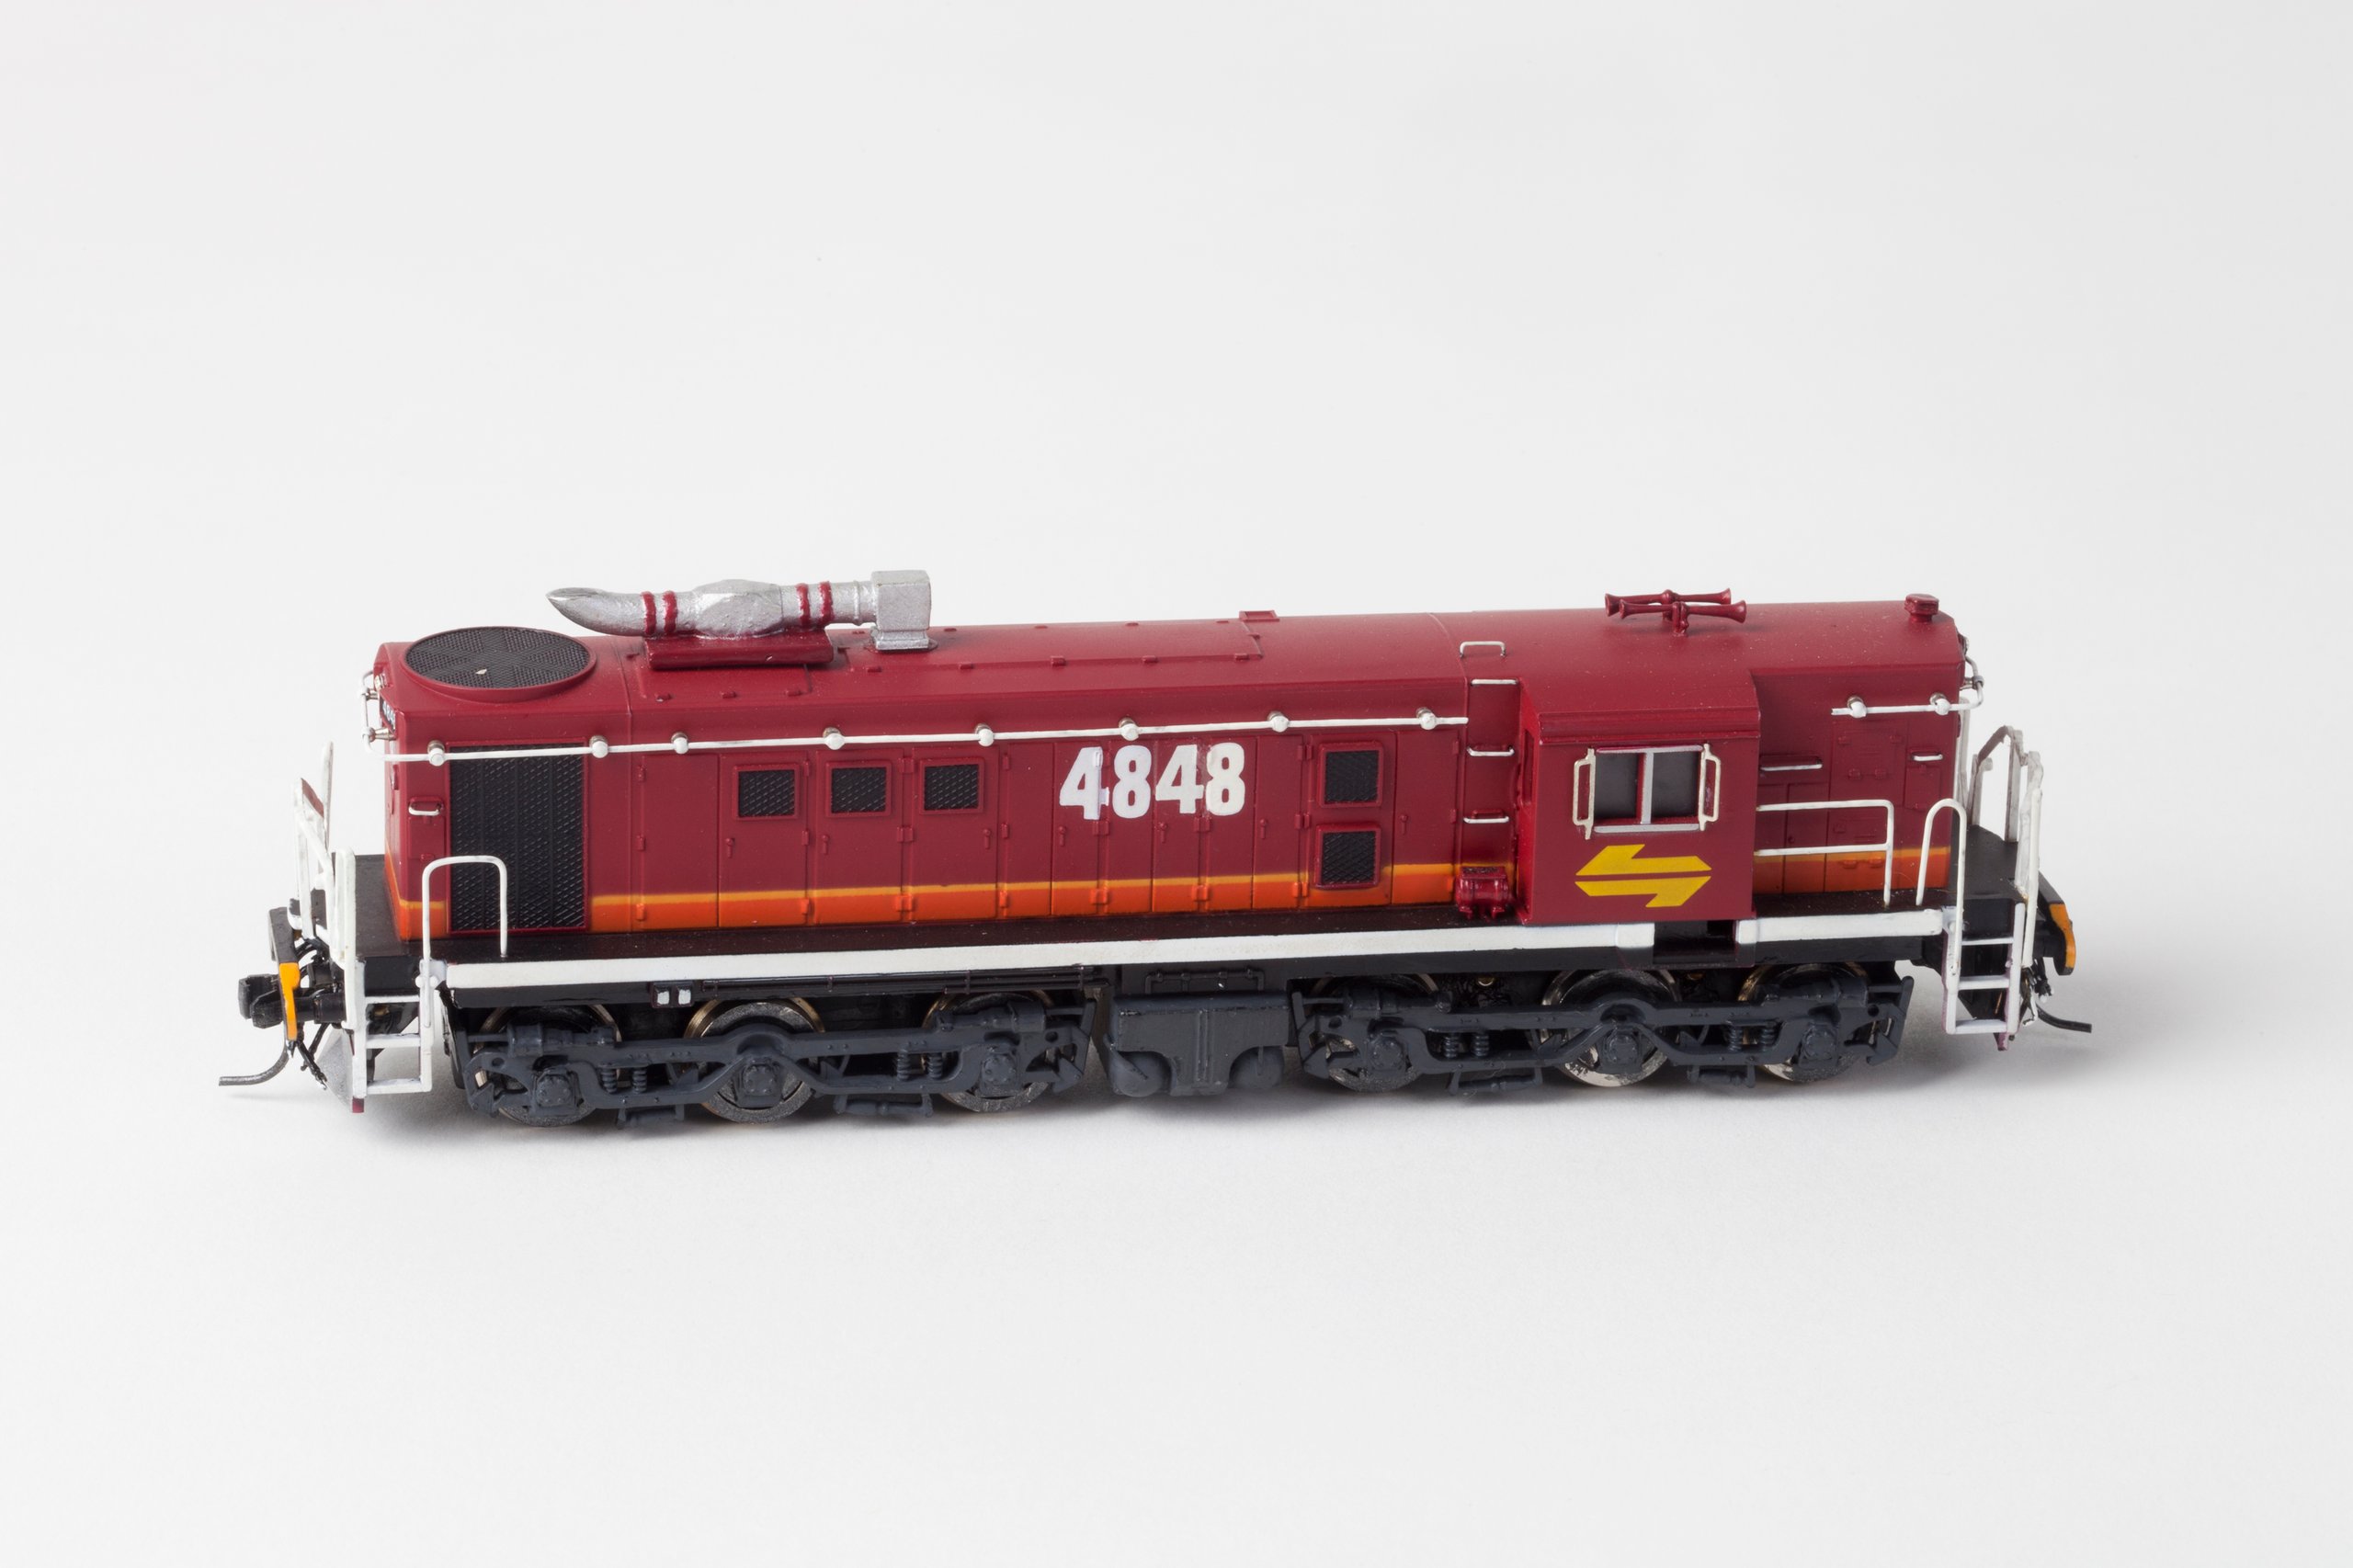 Powerhouse Collection - Model of NSW railways diesel-electric locomotive  4848